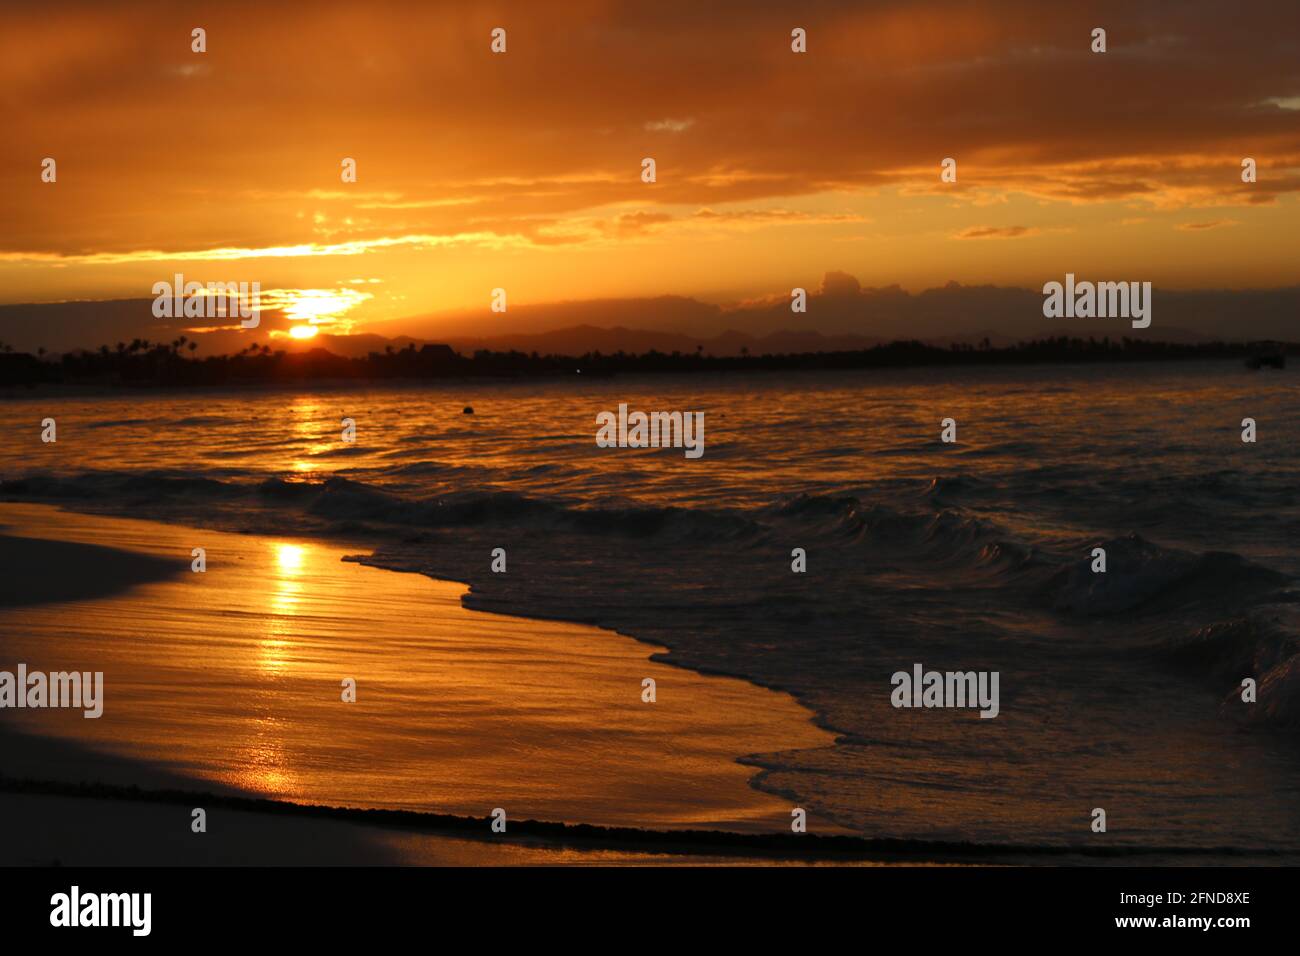 Sonnenuntergang in der Dominikanischen Republik bei Punta Cana/ Dominican Republic Stock Photo